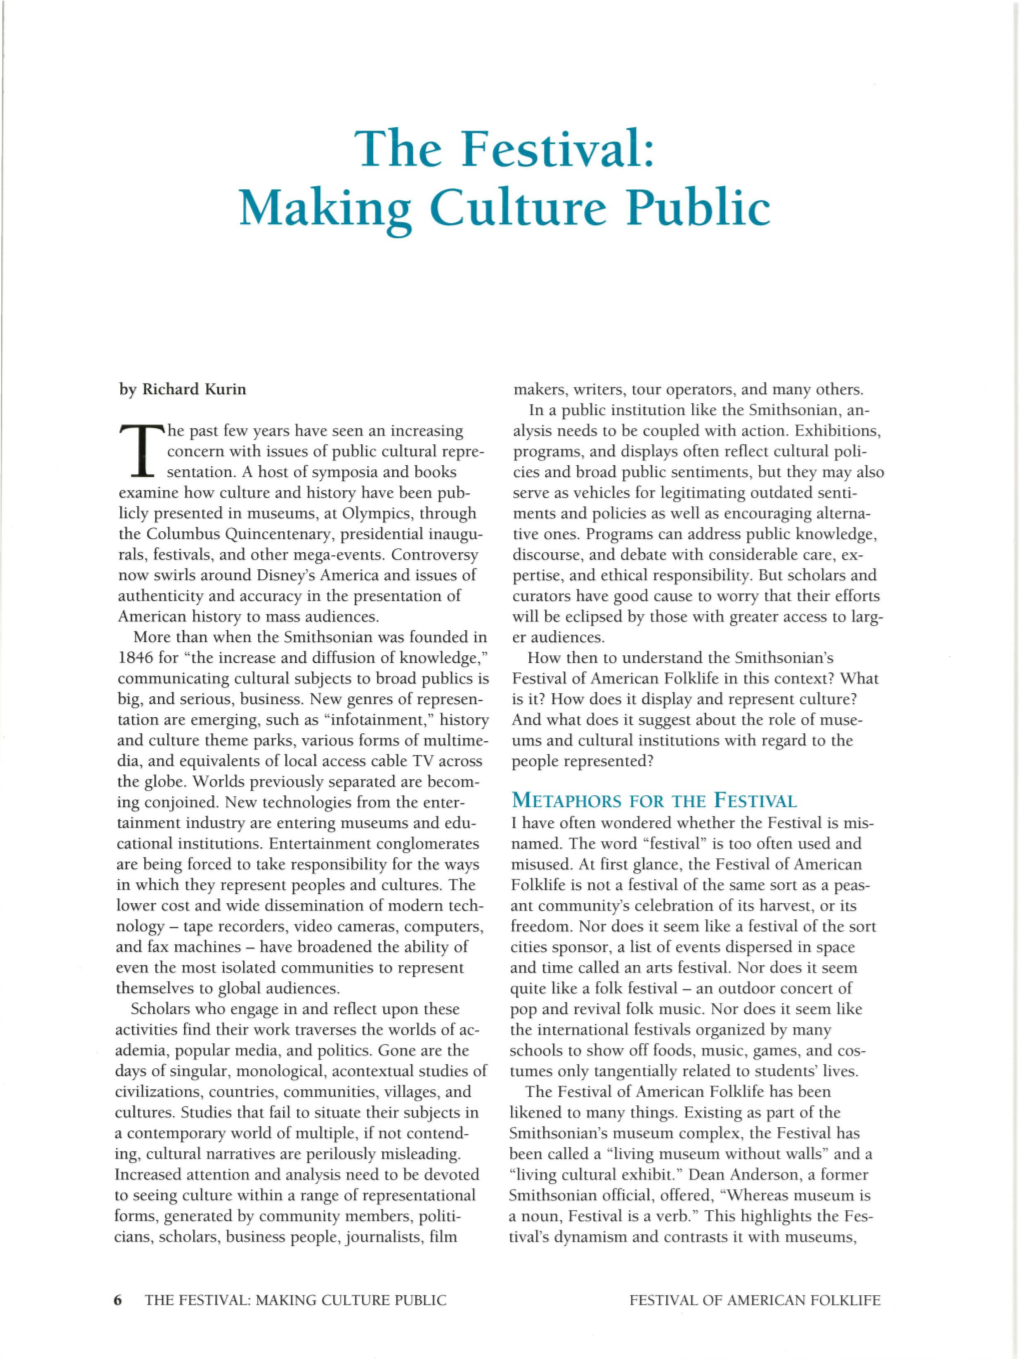 The Festival: Making Culture Public